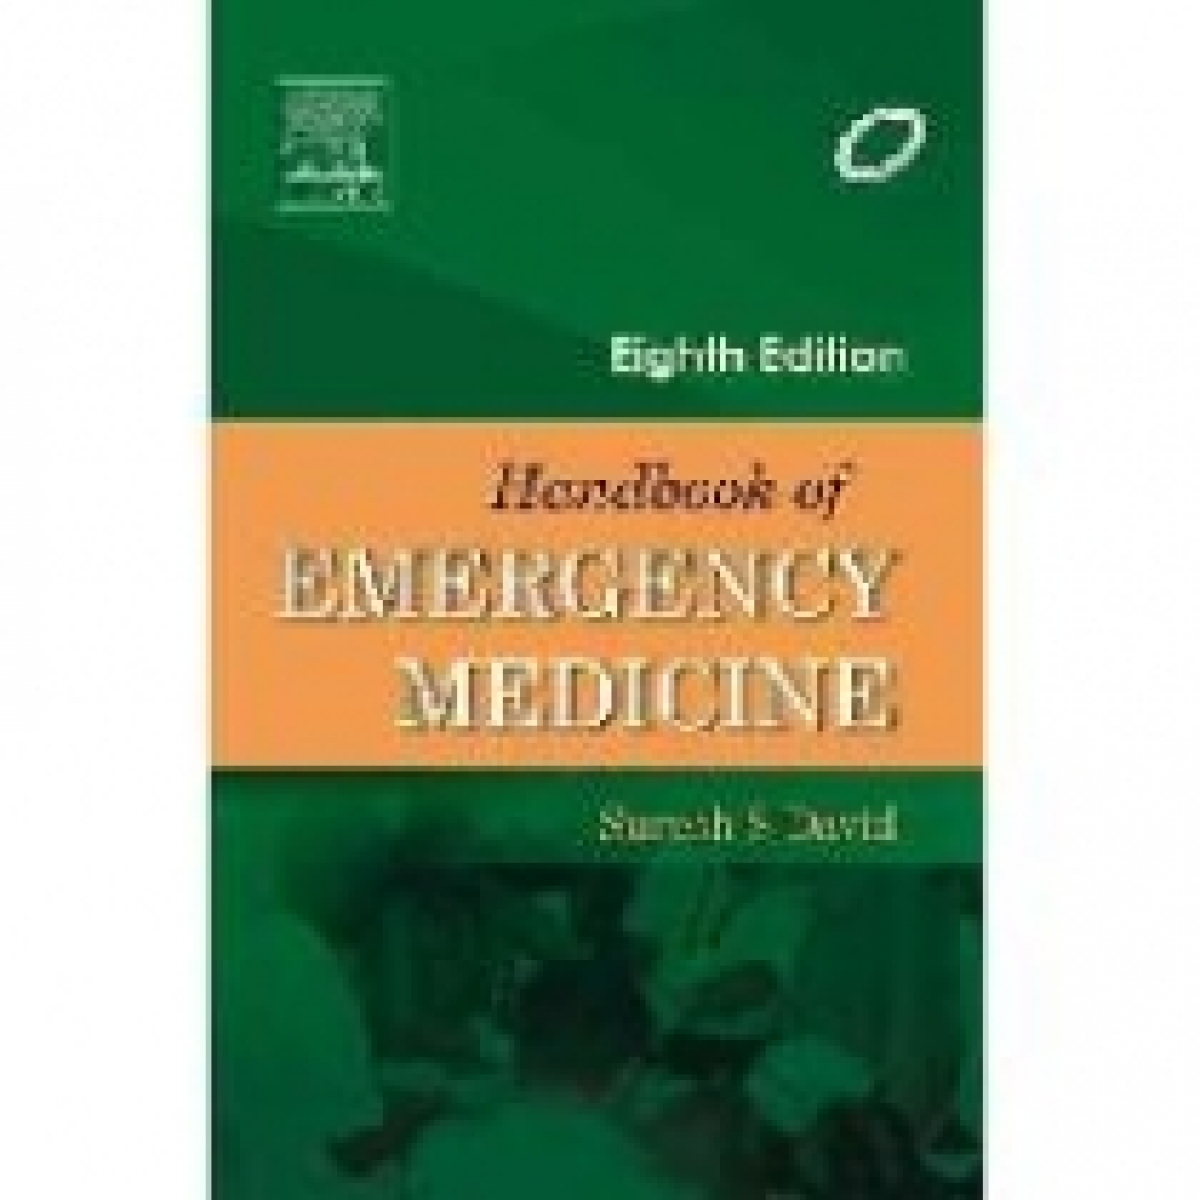 David, Suresh S. Handbook of Emergency Medicine 